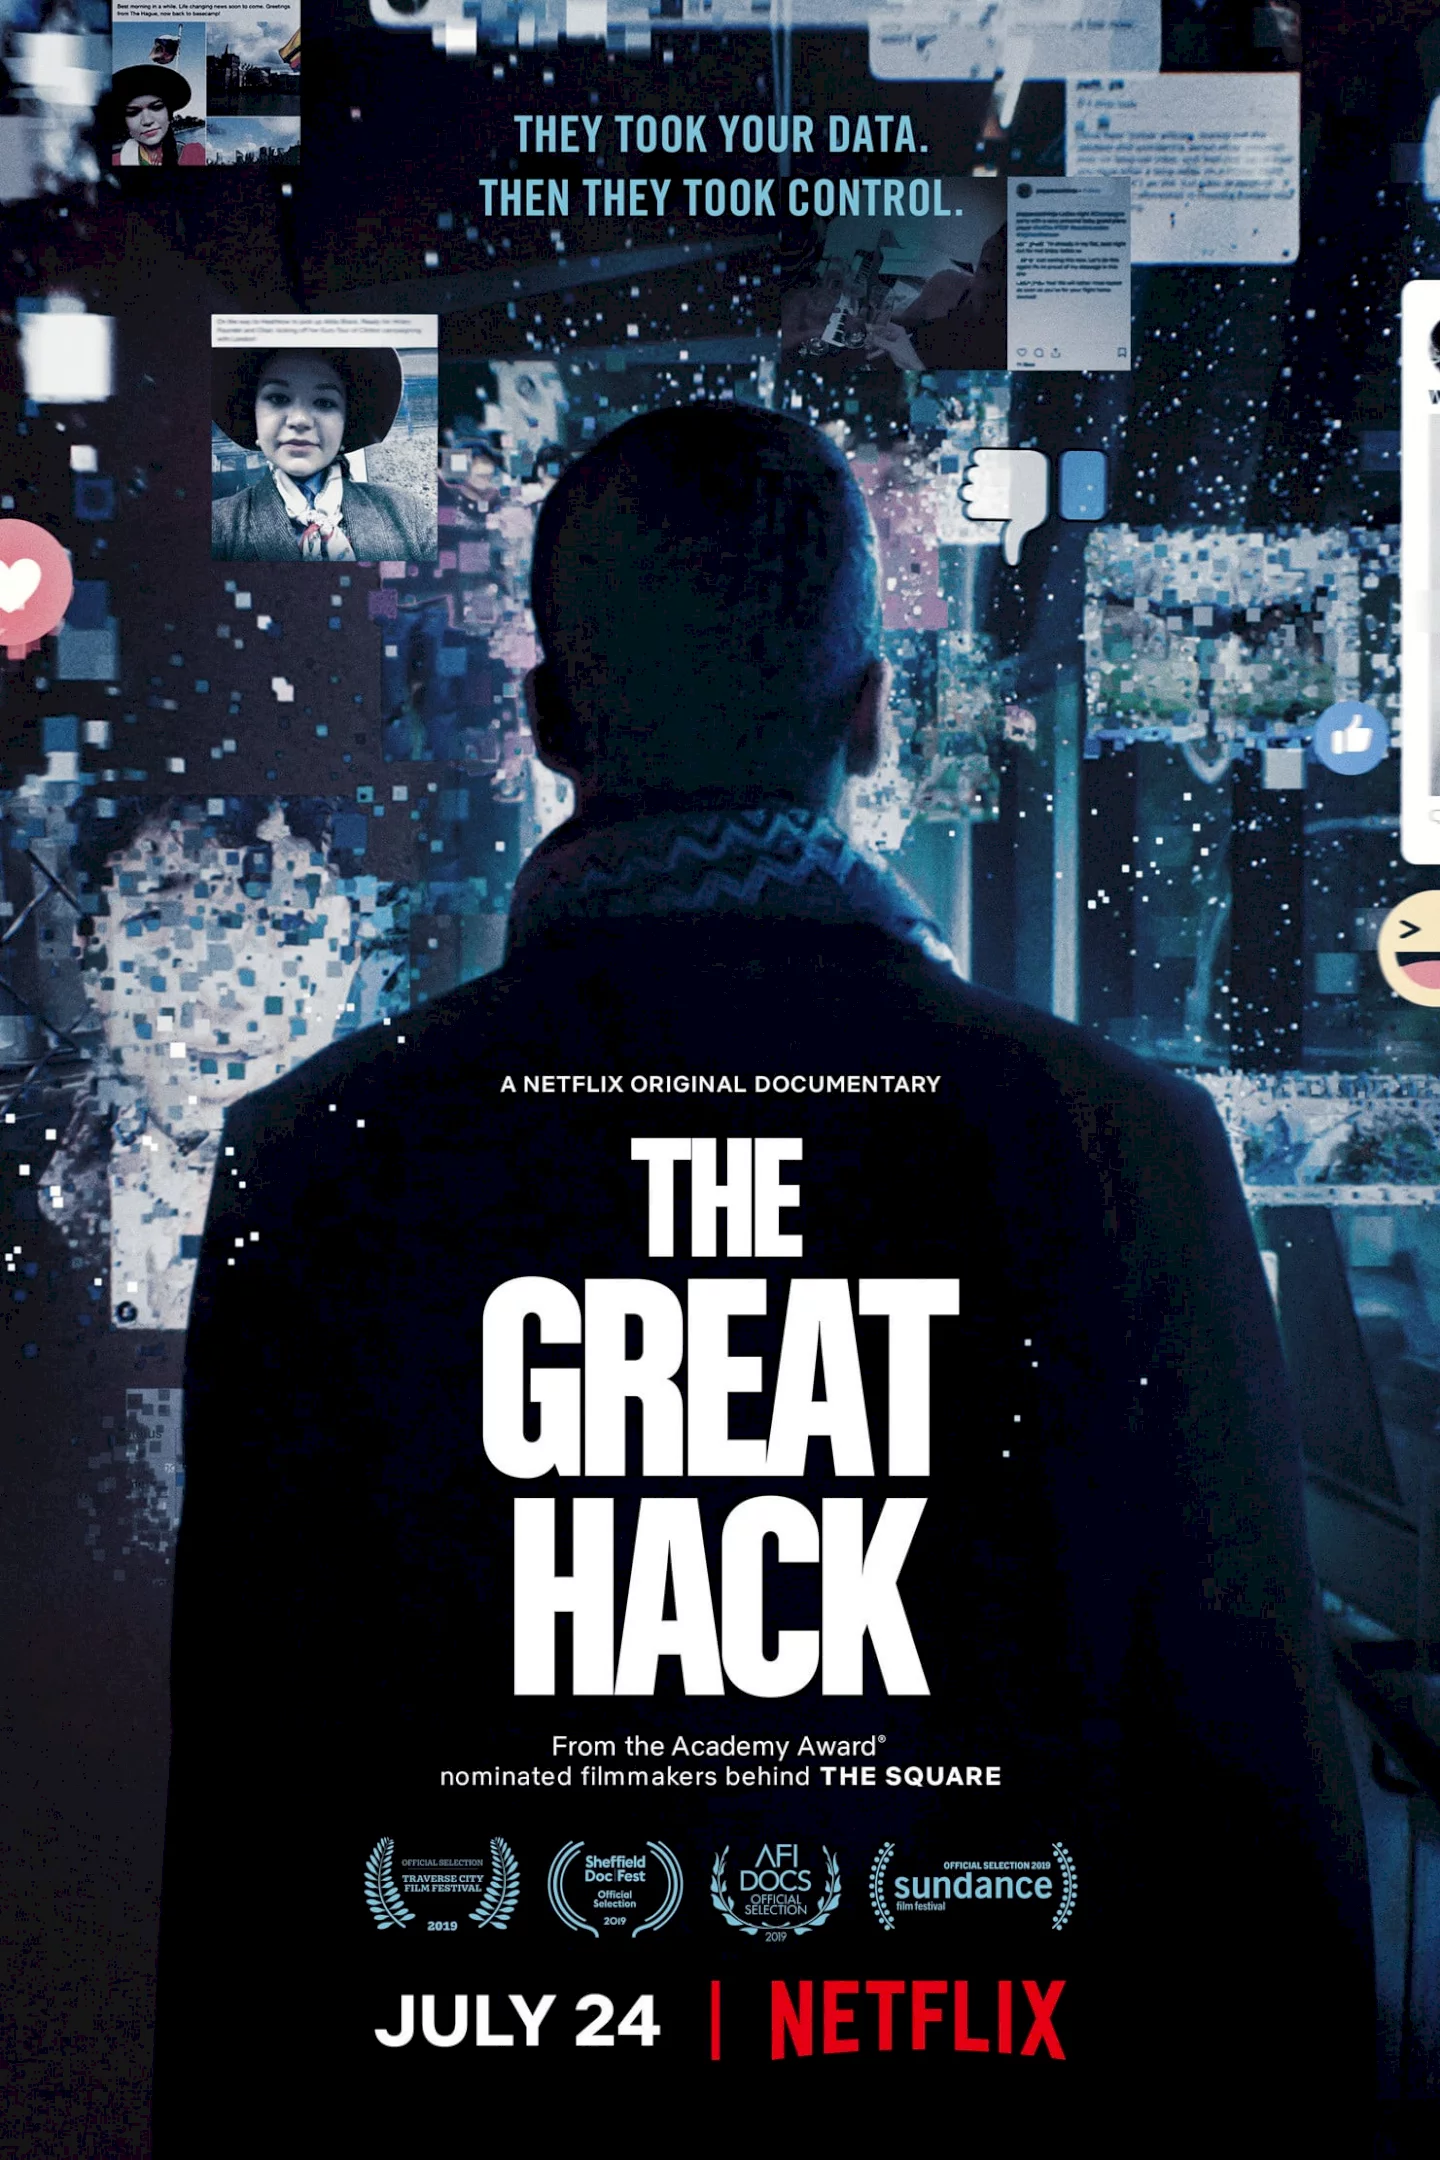 Photo du film : The Great Hack : L'affaire Cambridge Analytica